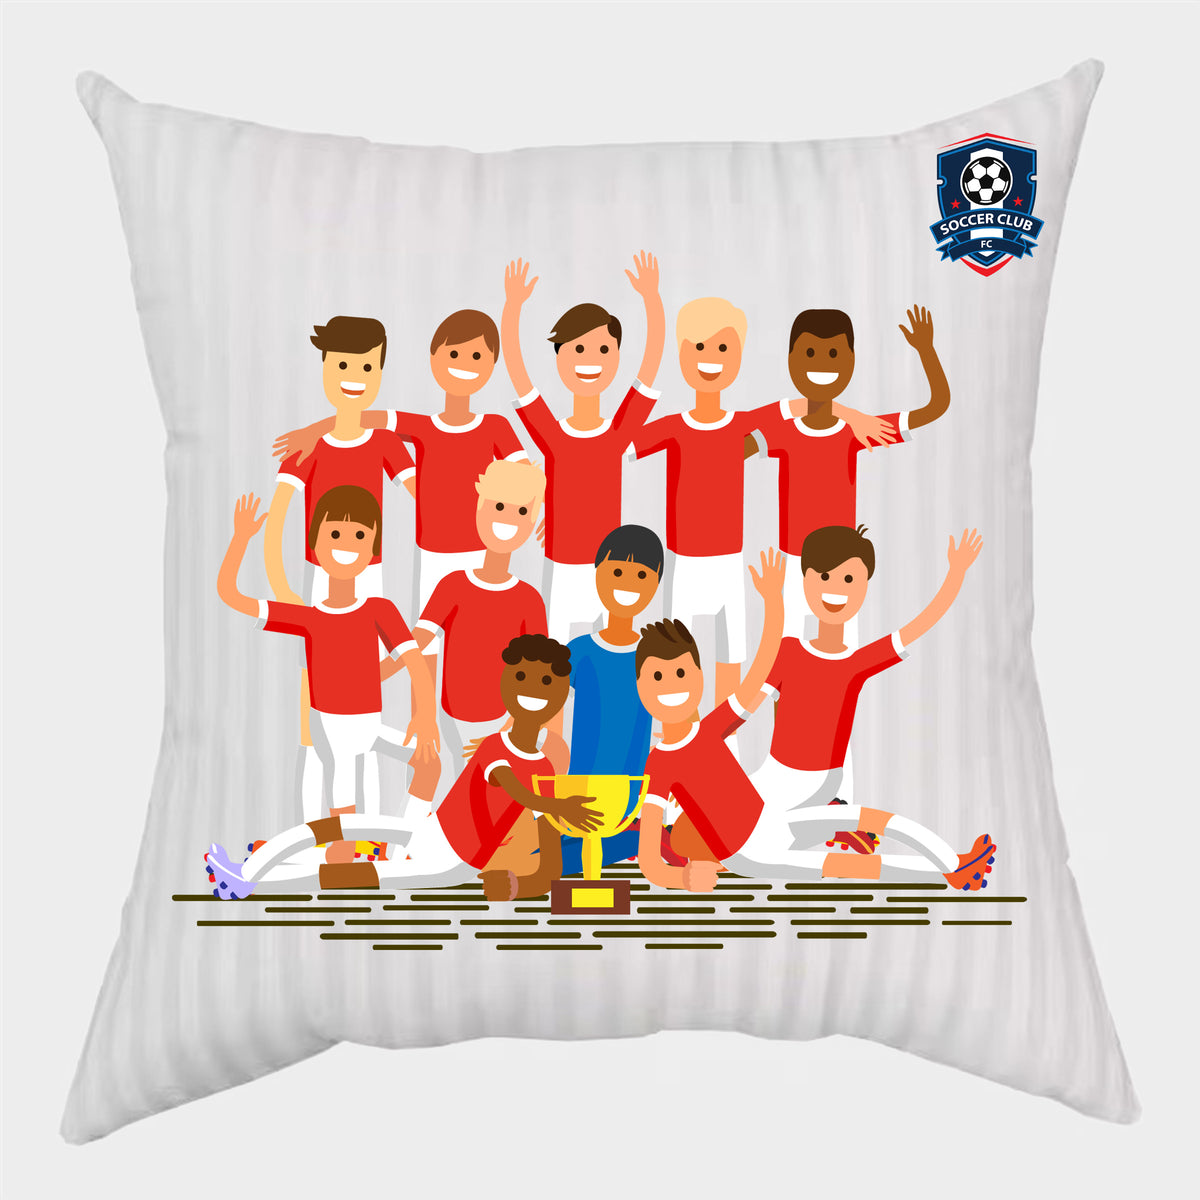 【Sport Club系列】Cushion訂製 客製化cushion 球隊圖案訂製 訂製球隊logo